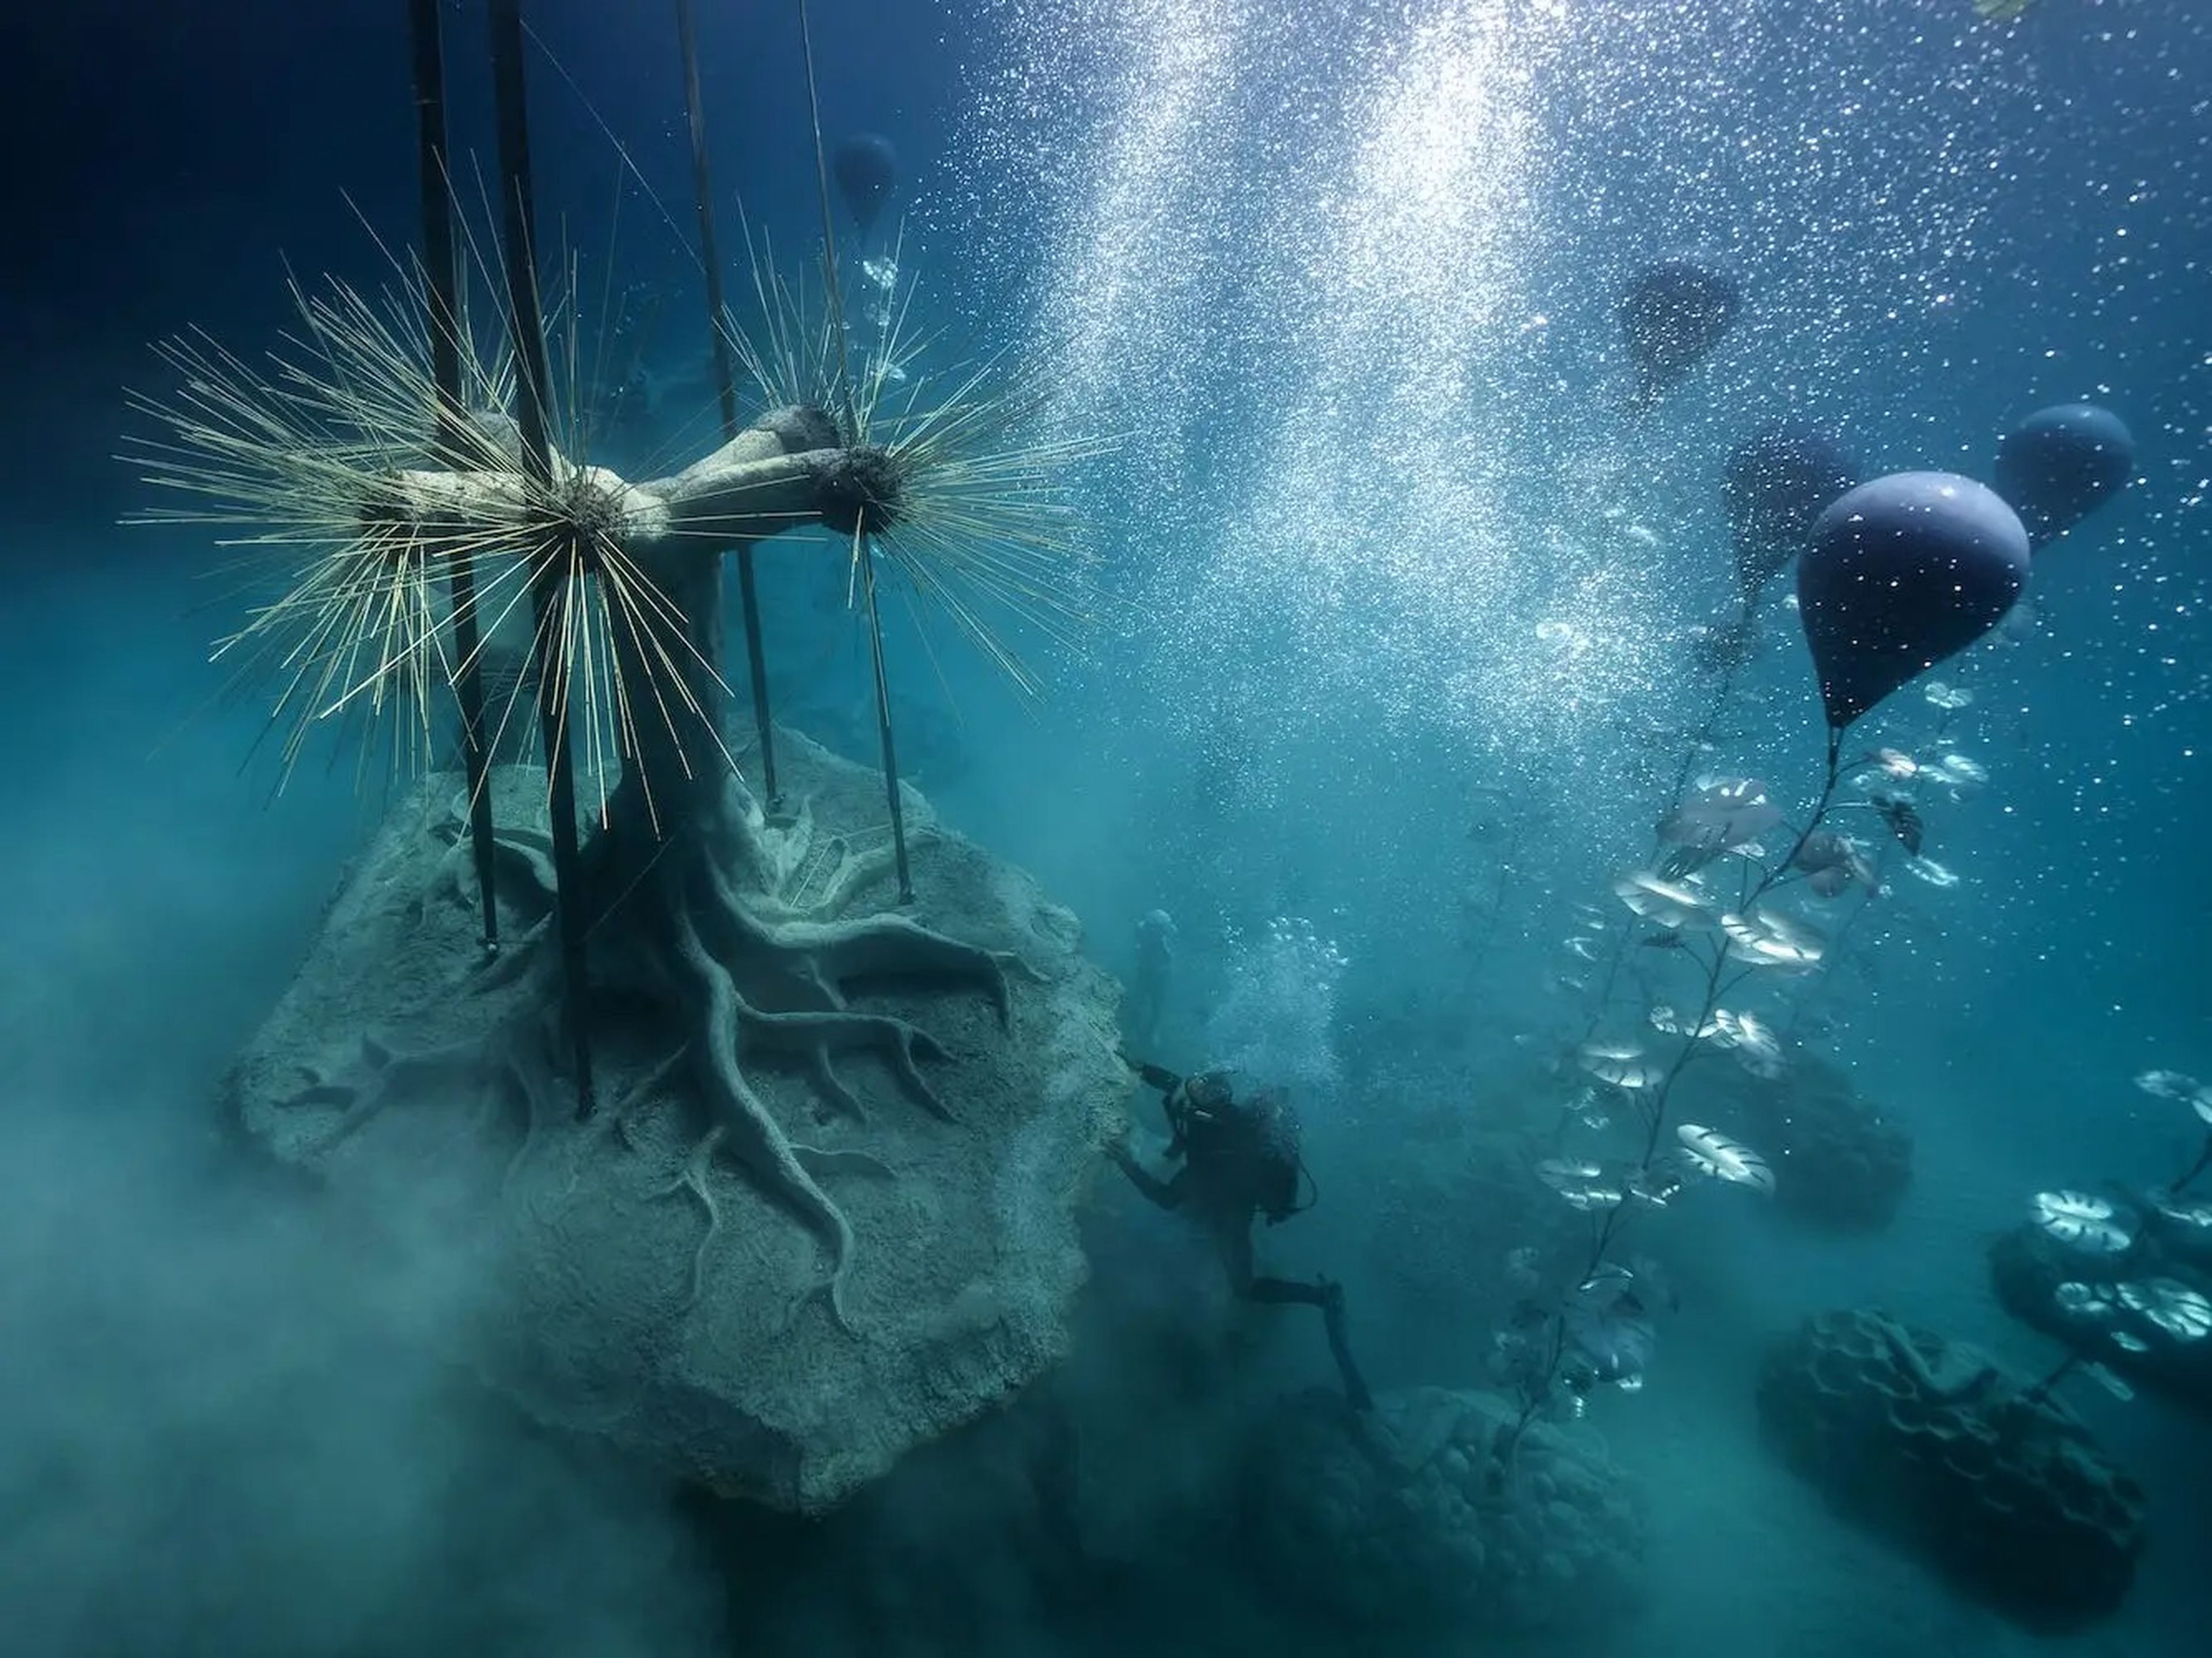 Una grúa baja una escultura al fondo del océano.